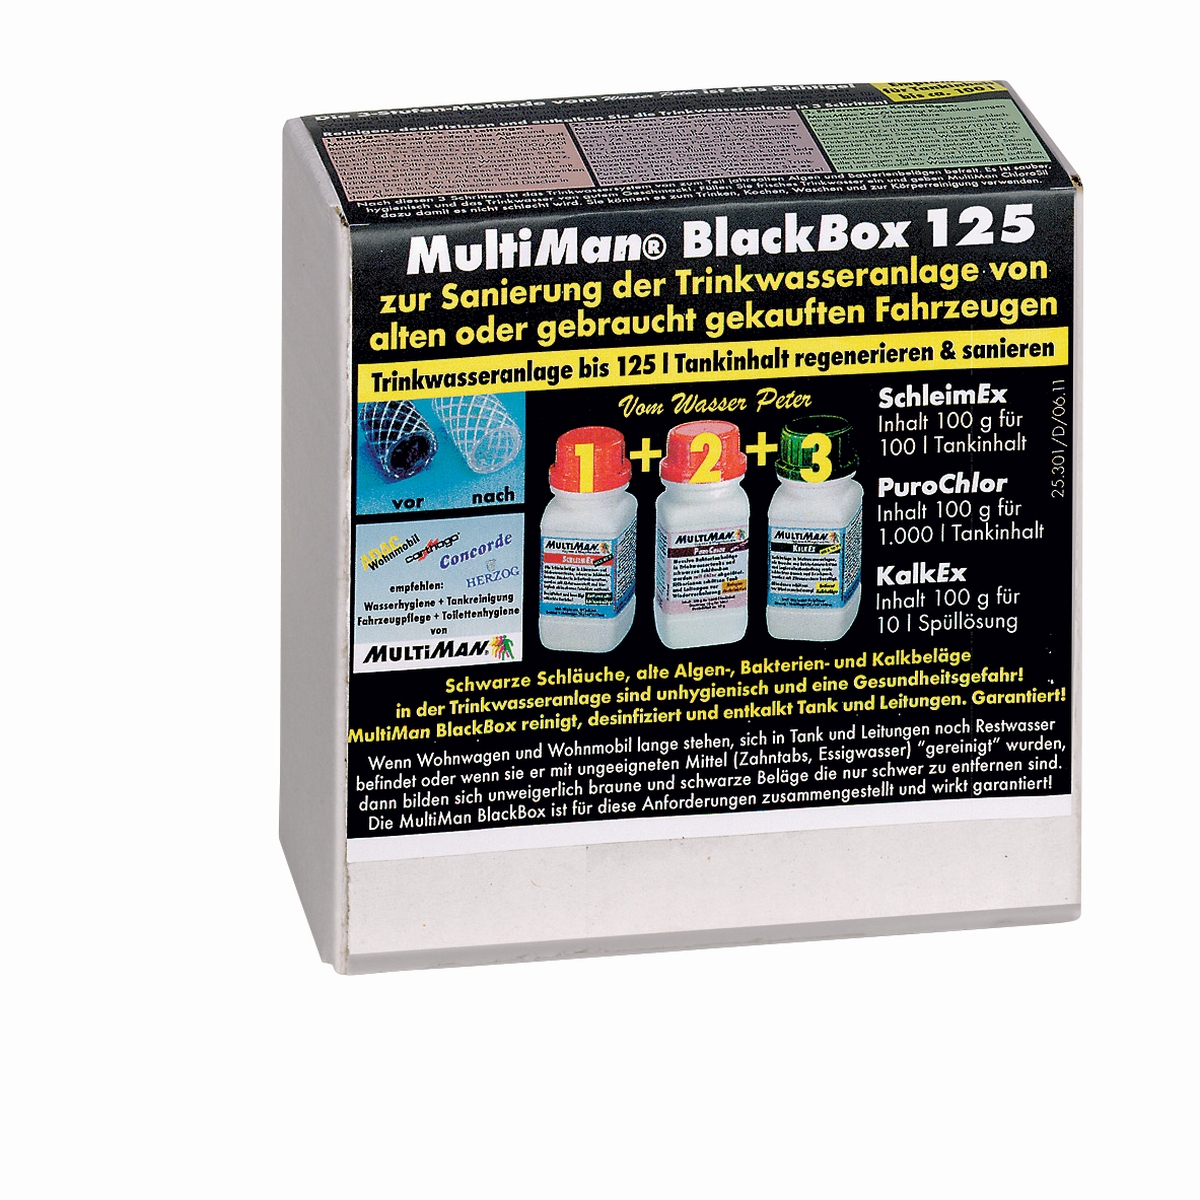 MultiMan BlackBox 125